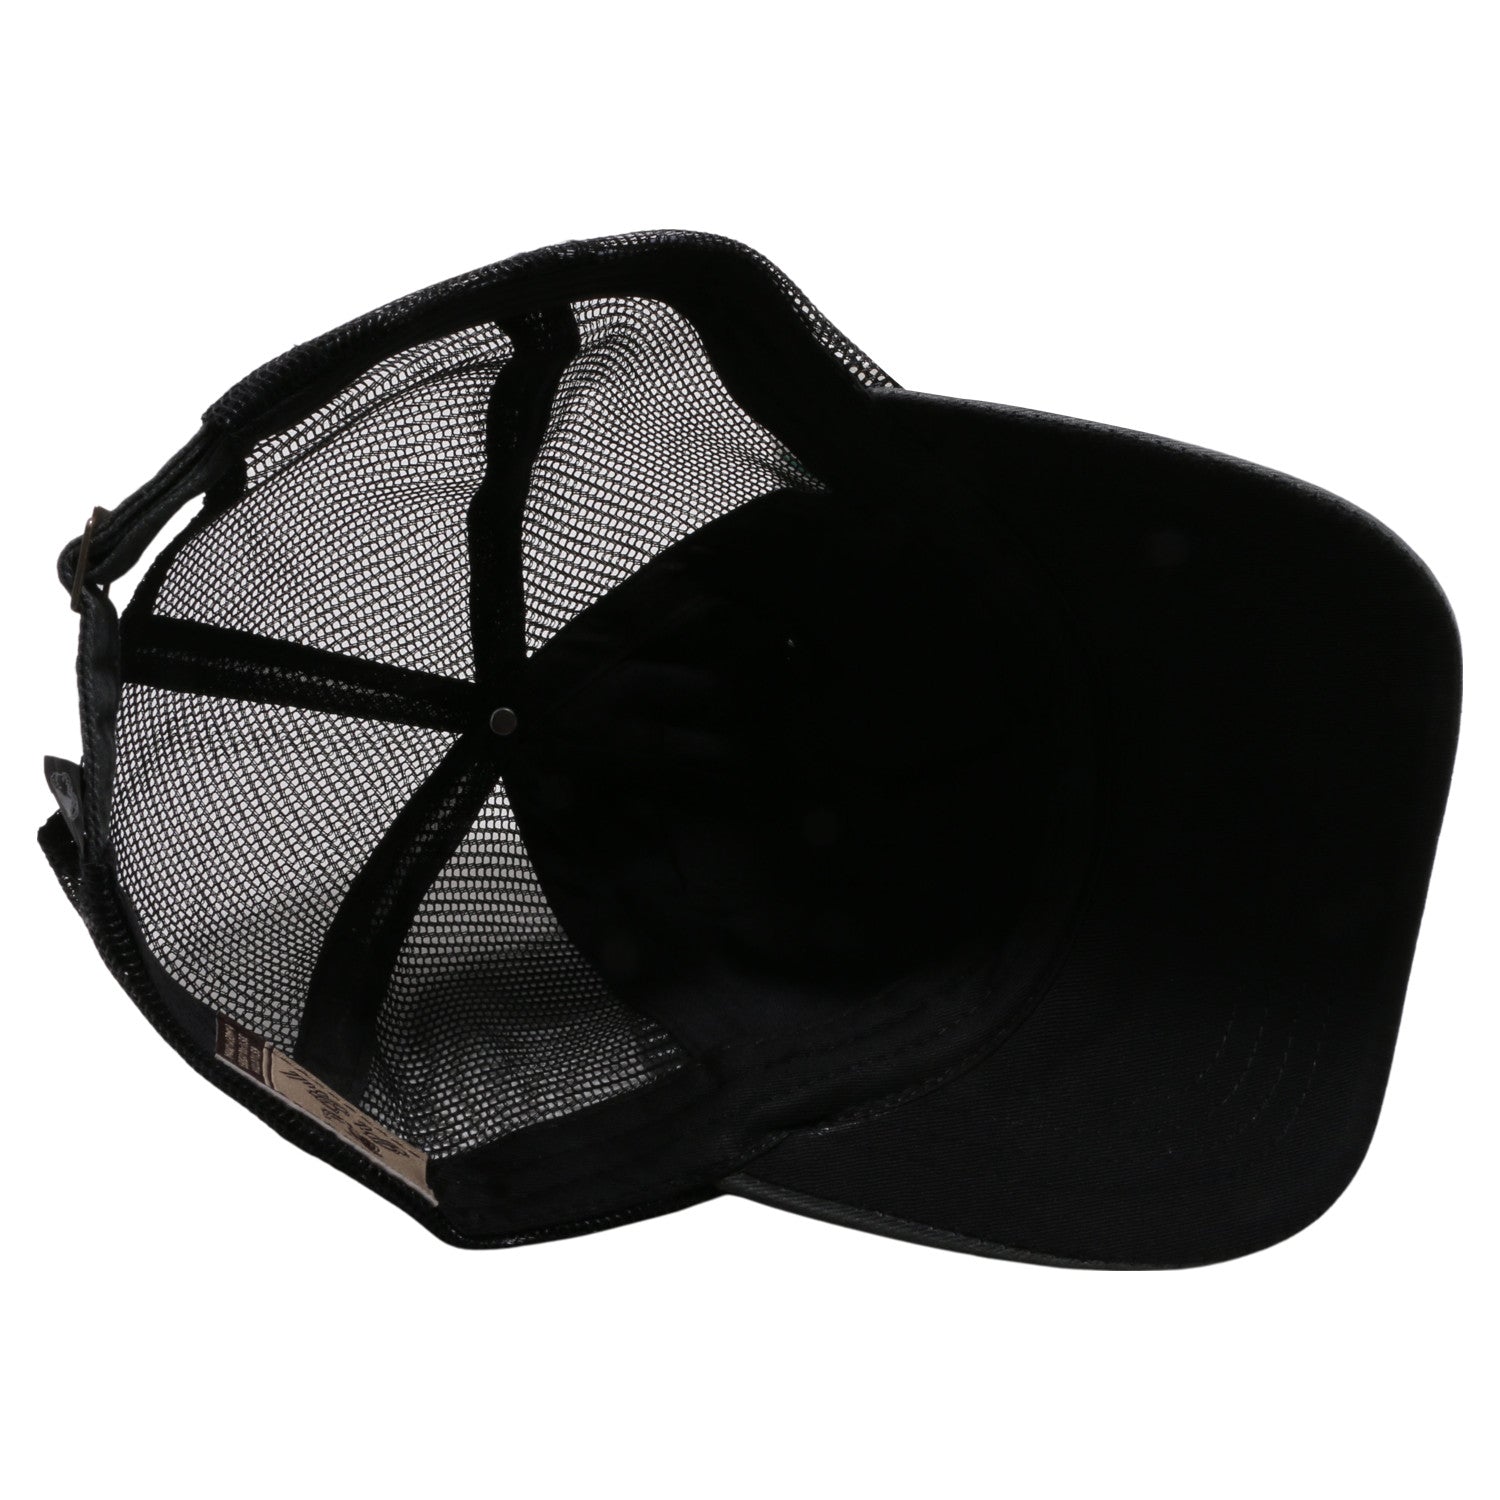 PB221 Pit Bull Pigment Dyed Trucker Hat [Black] – CHOICE CAP, INC.